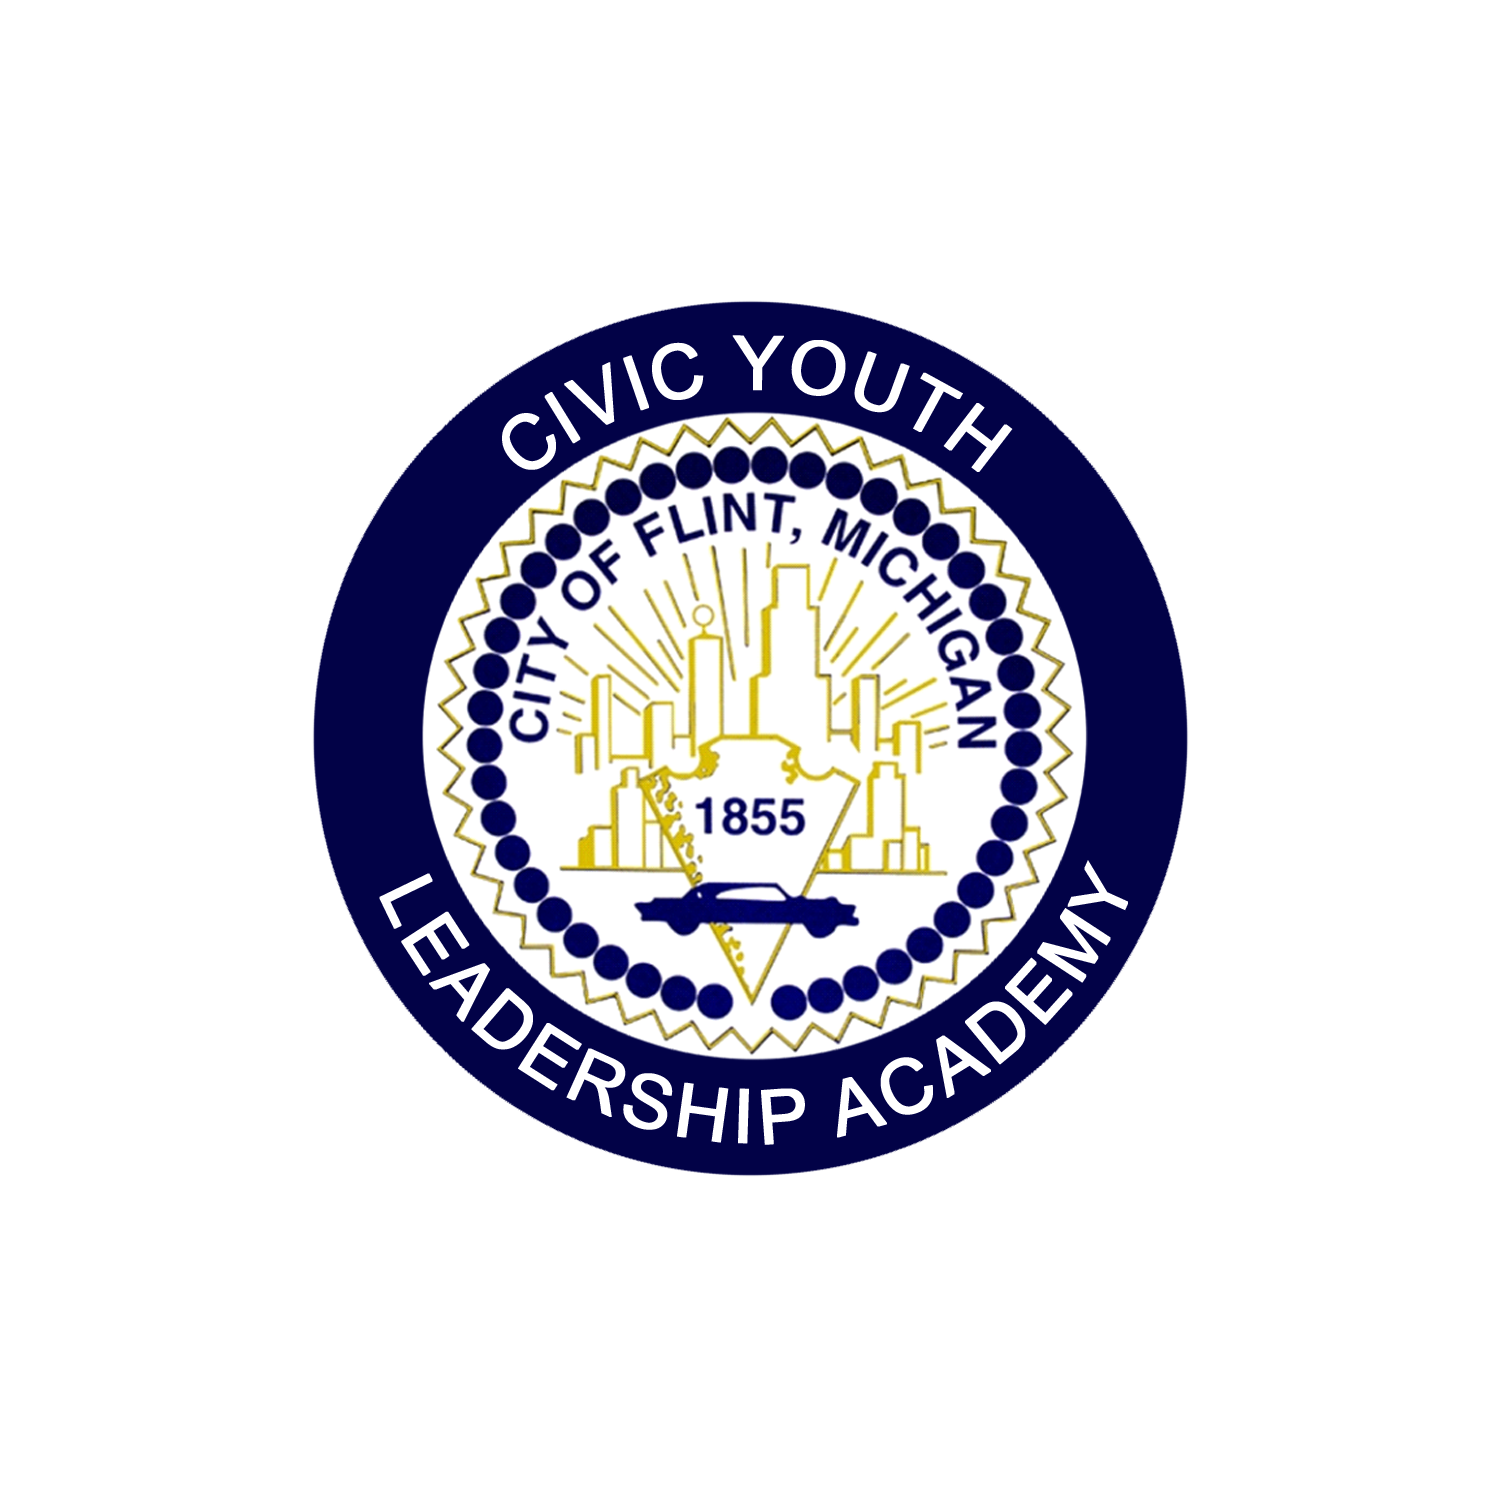 CIVIC Youth Leadership